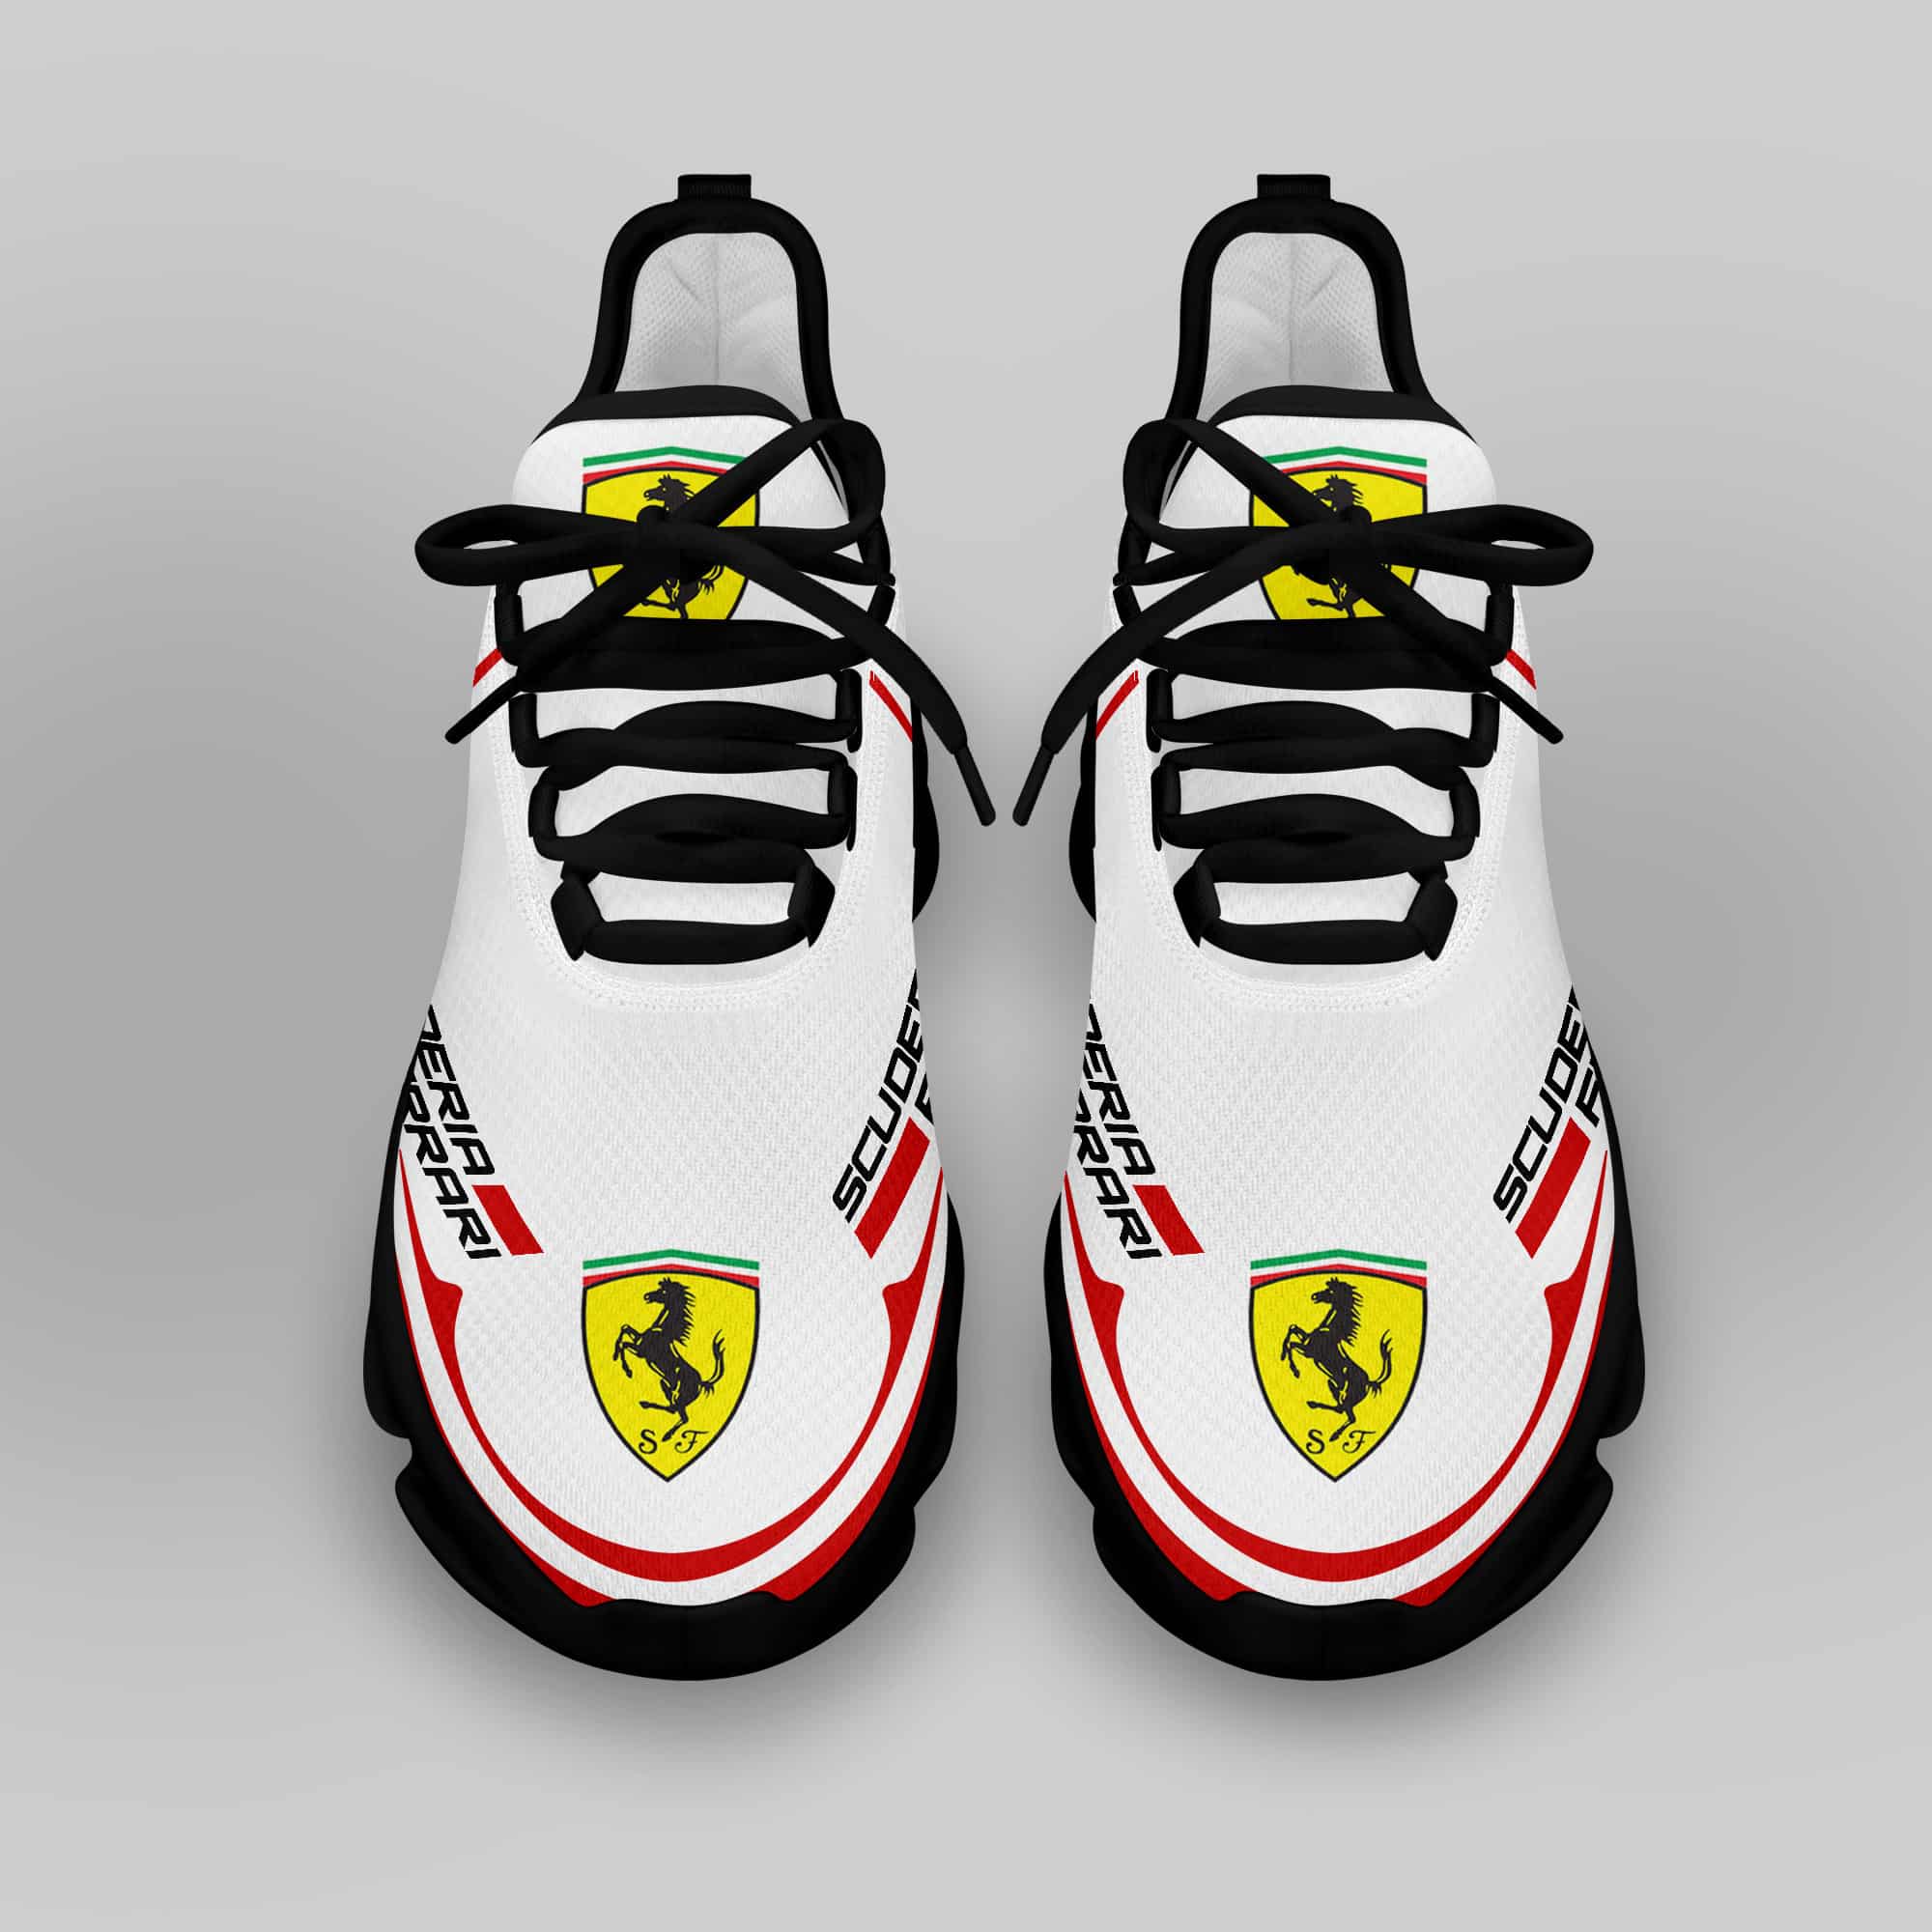 Ferrari Sneaker Running Shoes Max Soul Shoes Sneakers Ver 25 4